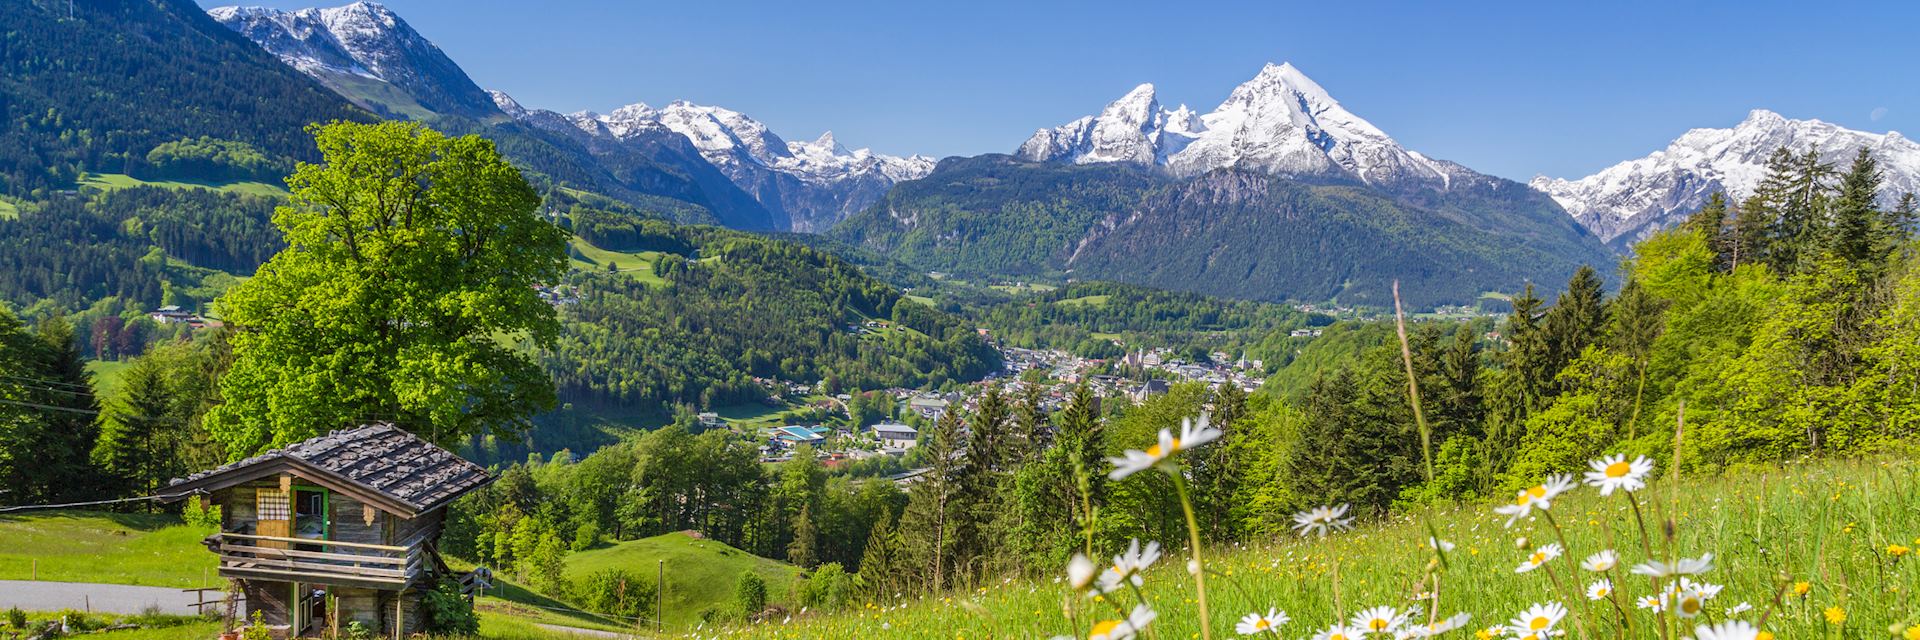 Scenery in the Austrian Alps